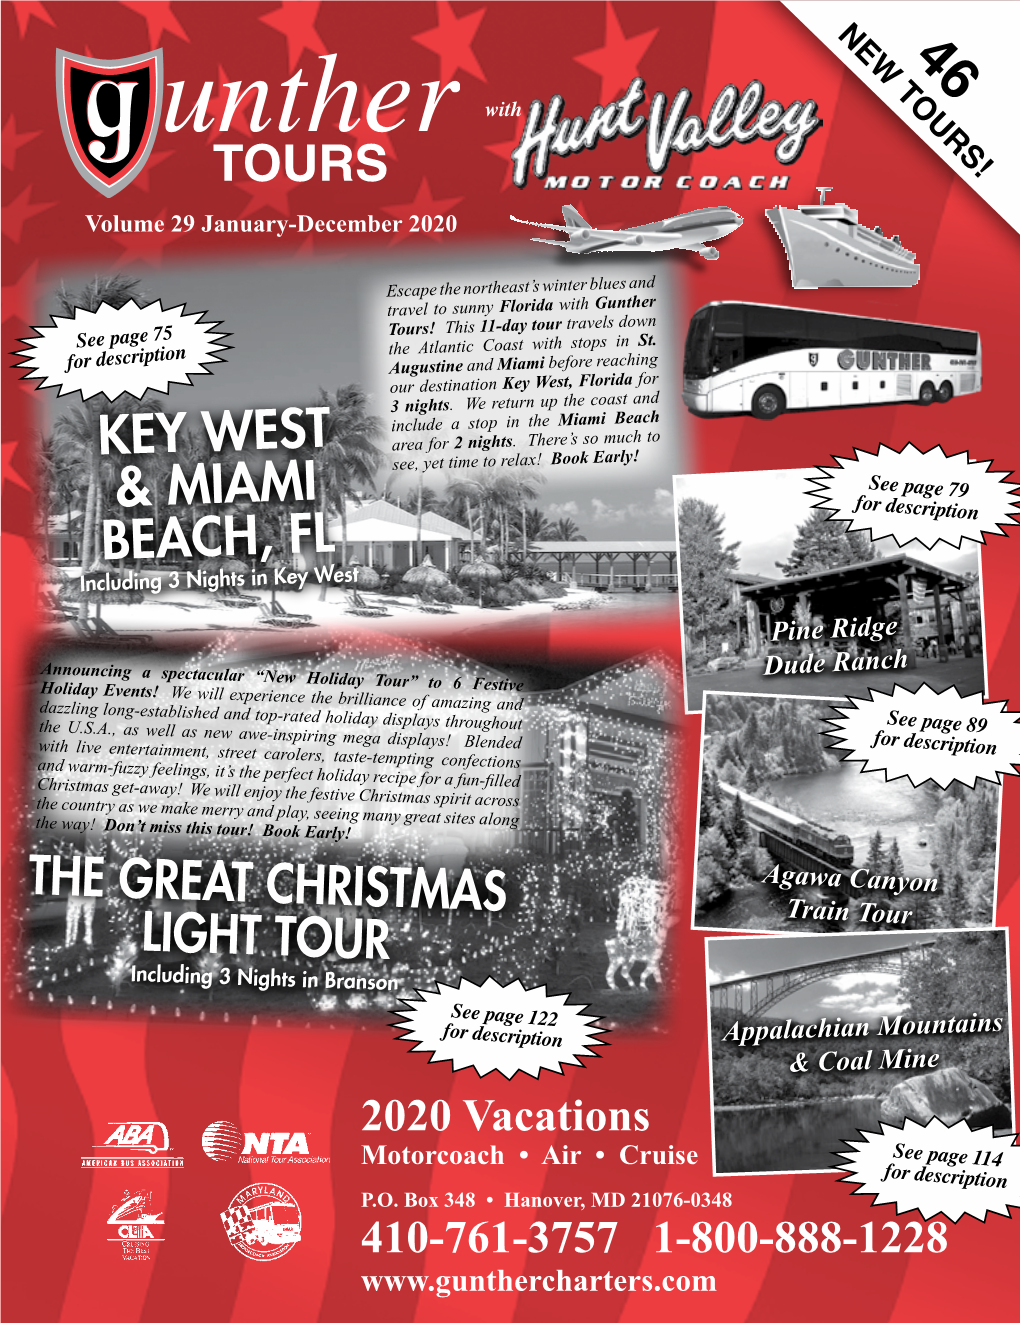 Key West & Miami Beach, Fl the Great Christmas Light Tour